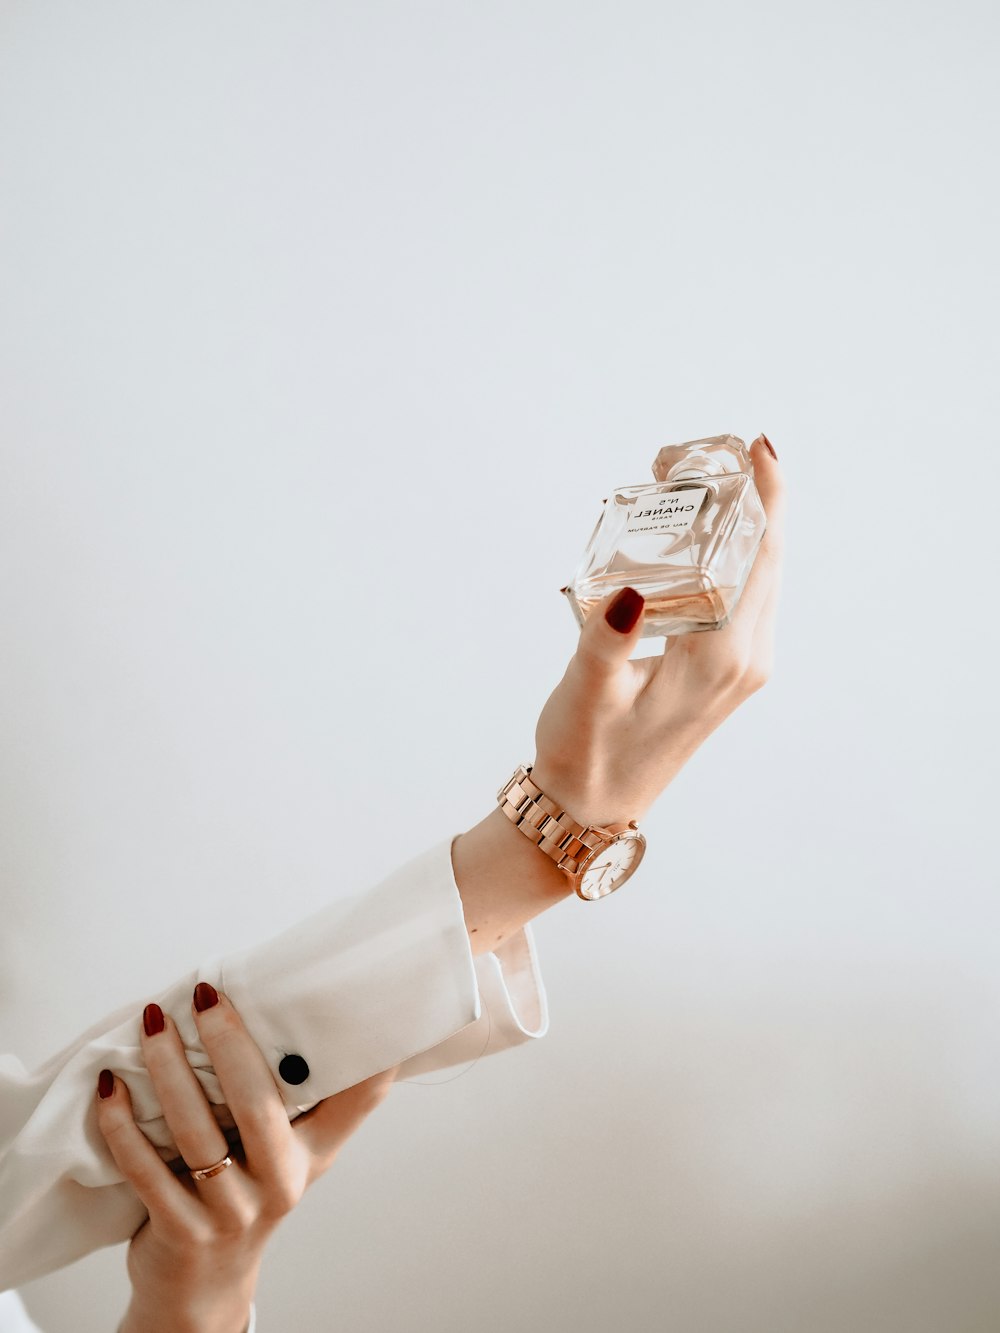 pessoa no vestido branco segurando garrafa de vidro transparente